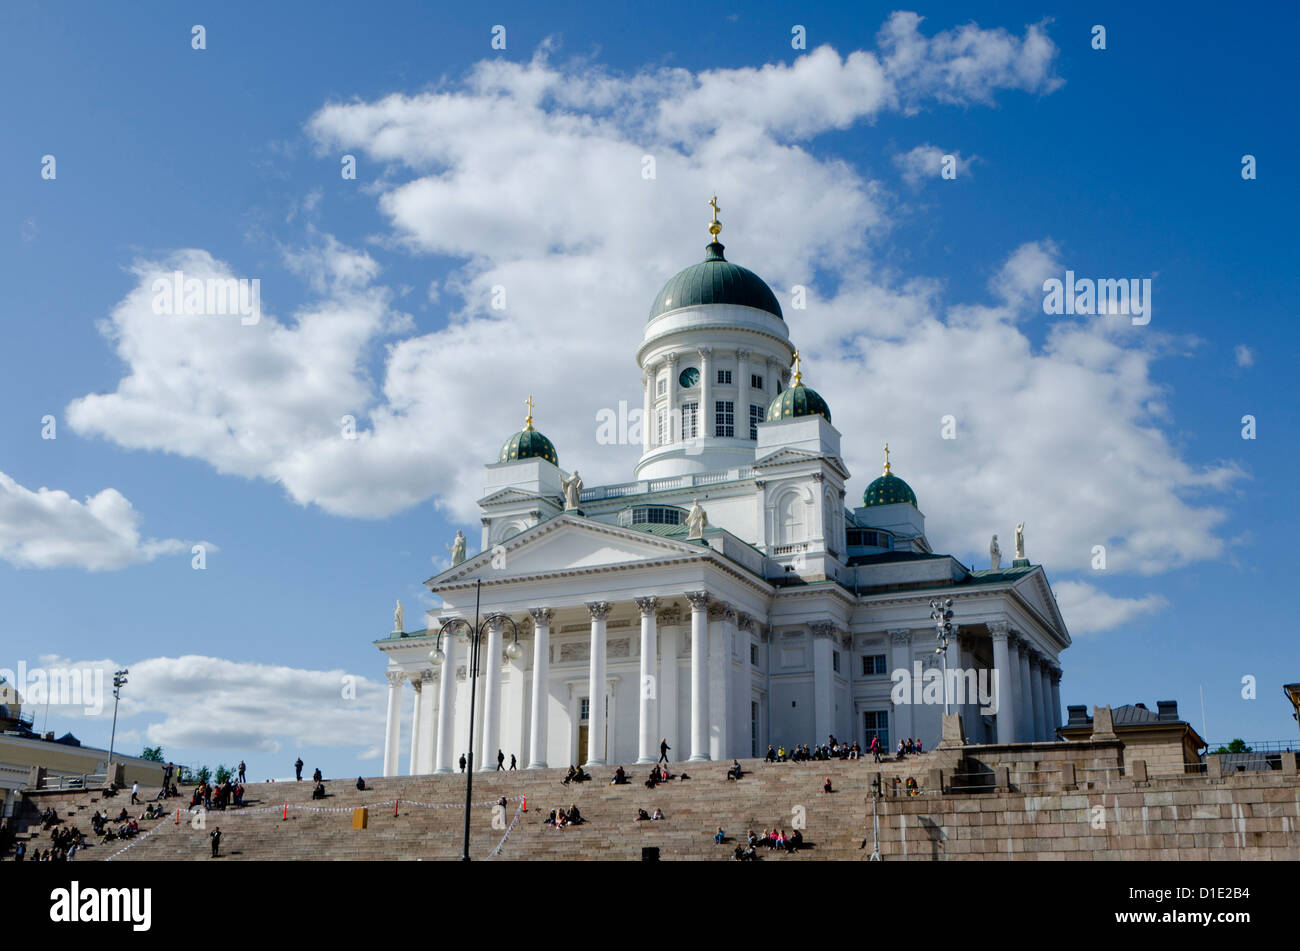 La cathédrale luthérienne, Helsinki, Finlande, Scandinavie, Europe Banque D'Images